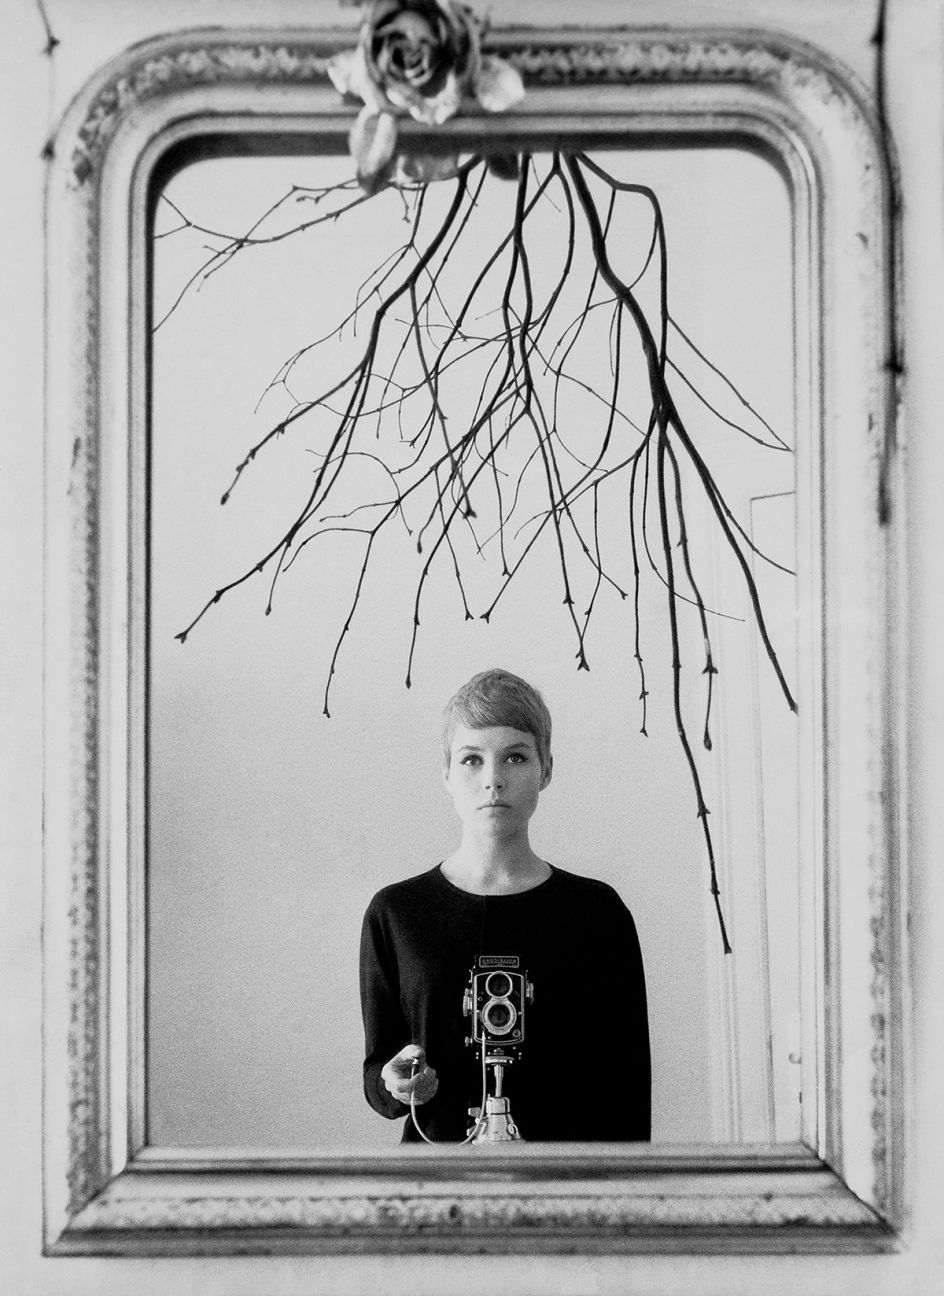 Astrid Kirchherr, self-portrait, 1960